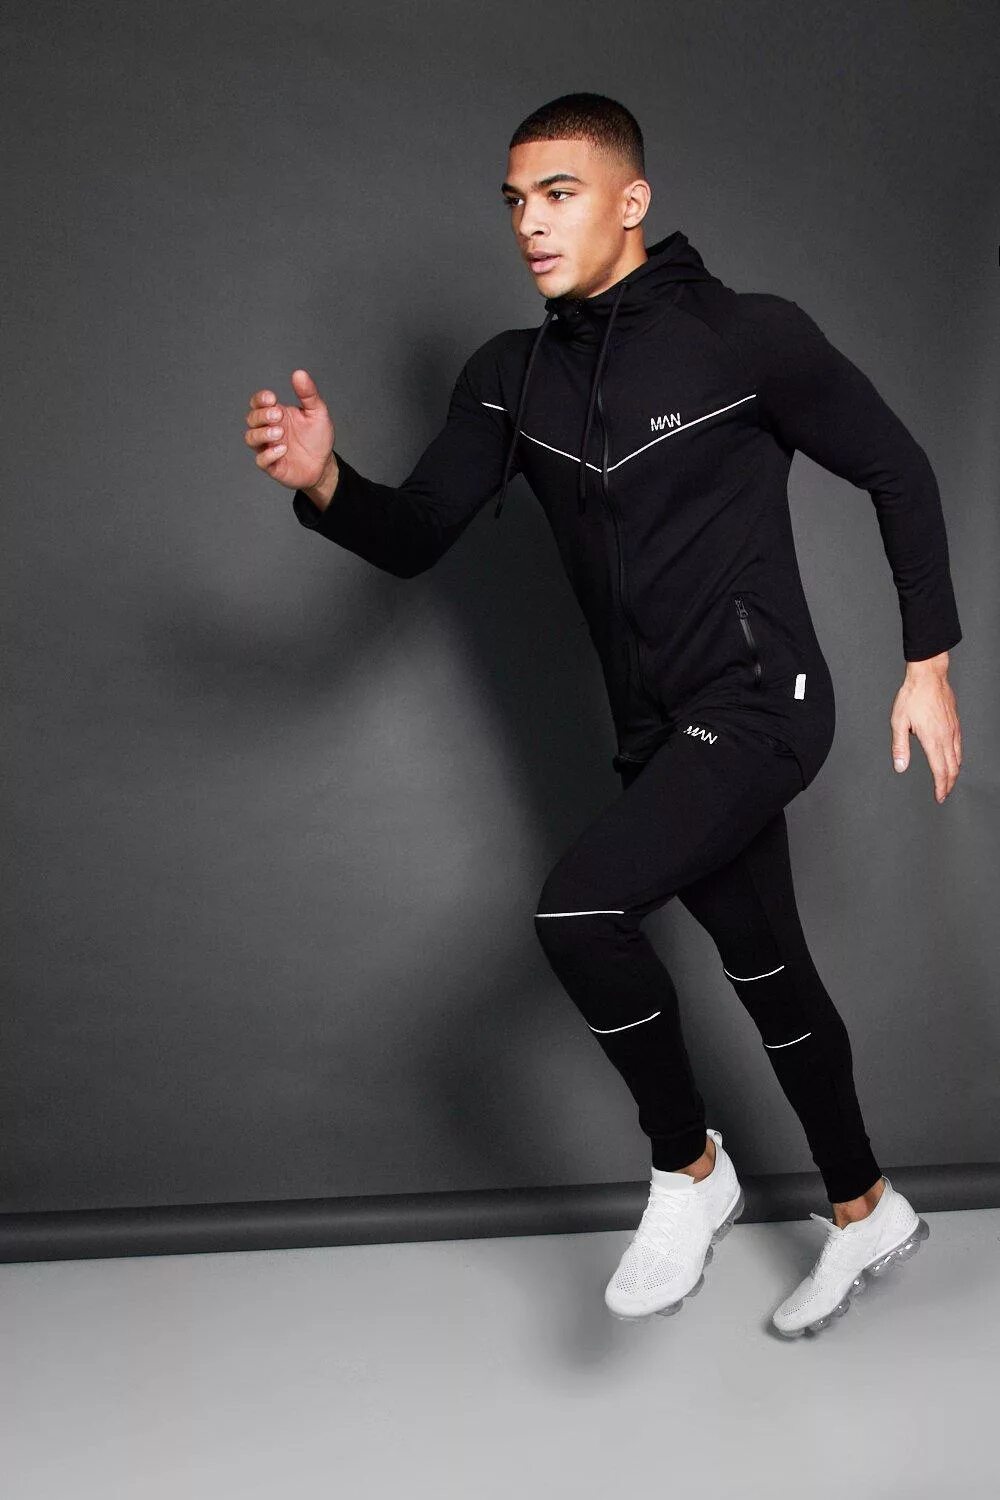 Обтягивающий спортивный костюм. Tracksuits for men Nike. Nike Mens Wear. Спортивка мужской найк 2020. Nike Sportswear Sport Essentials спортивный костюм.